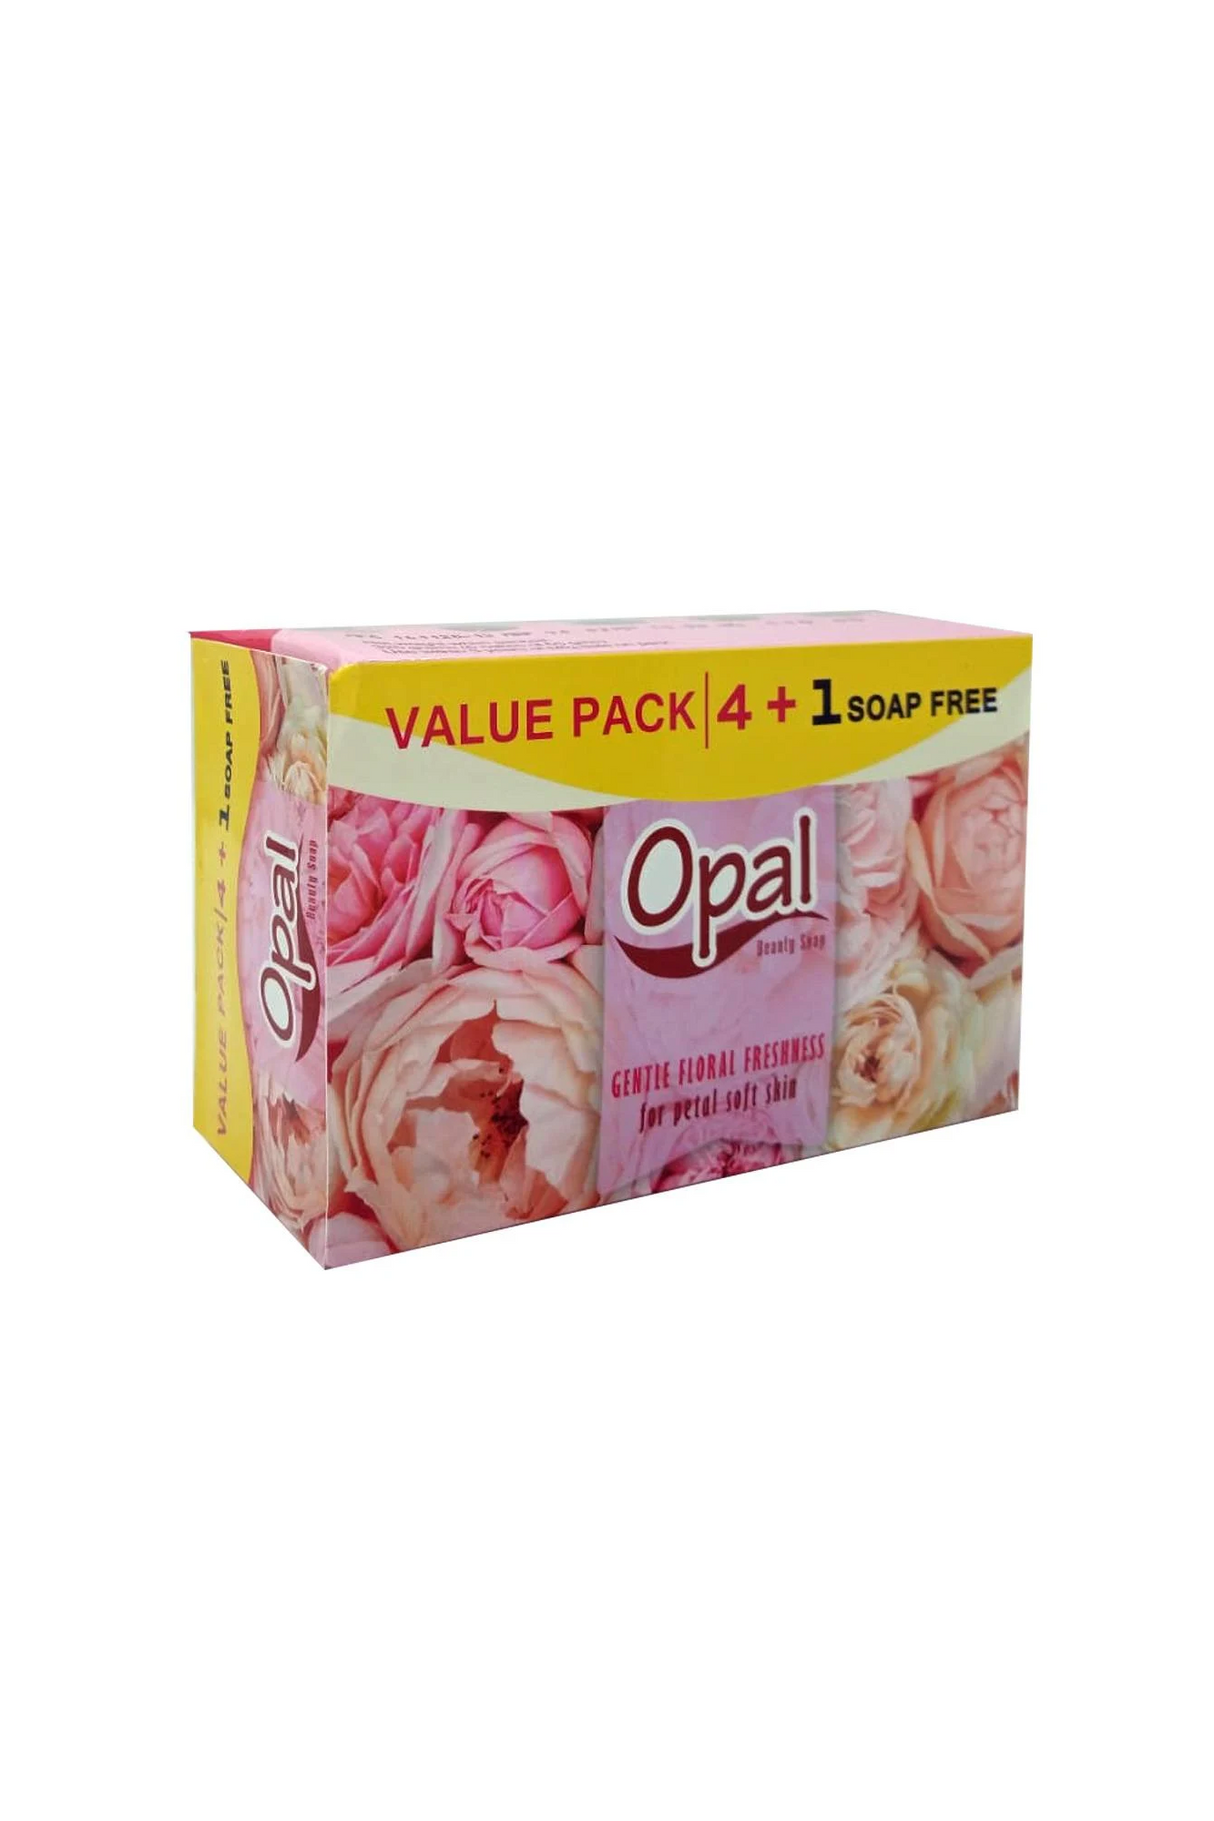 opal soap gentle floral 4+1 pack 300g